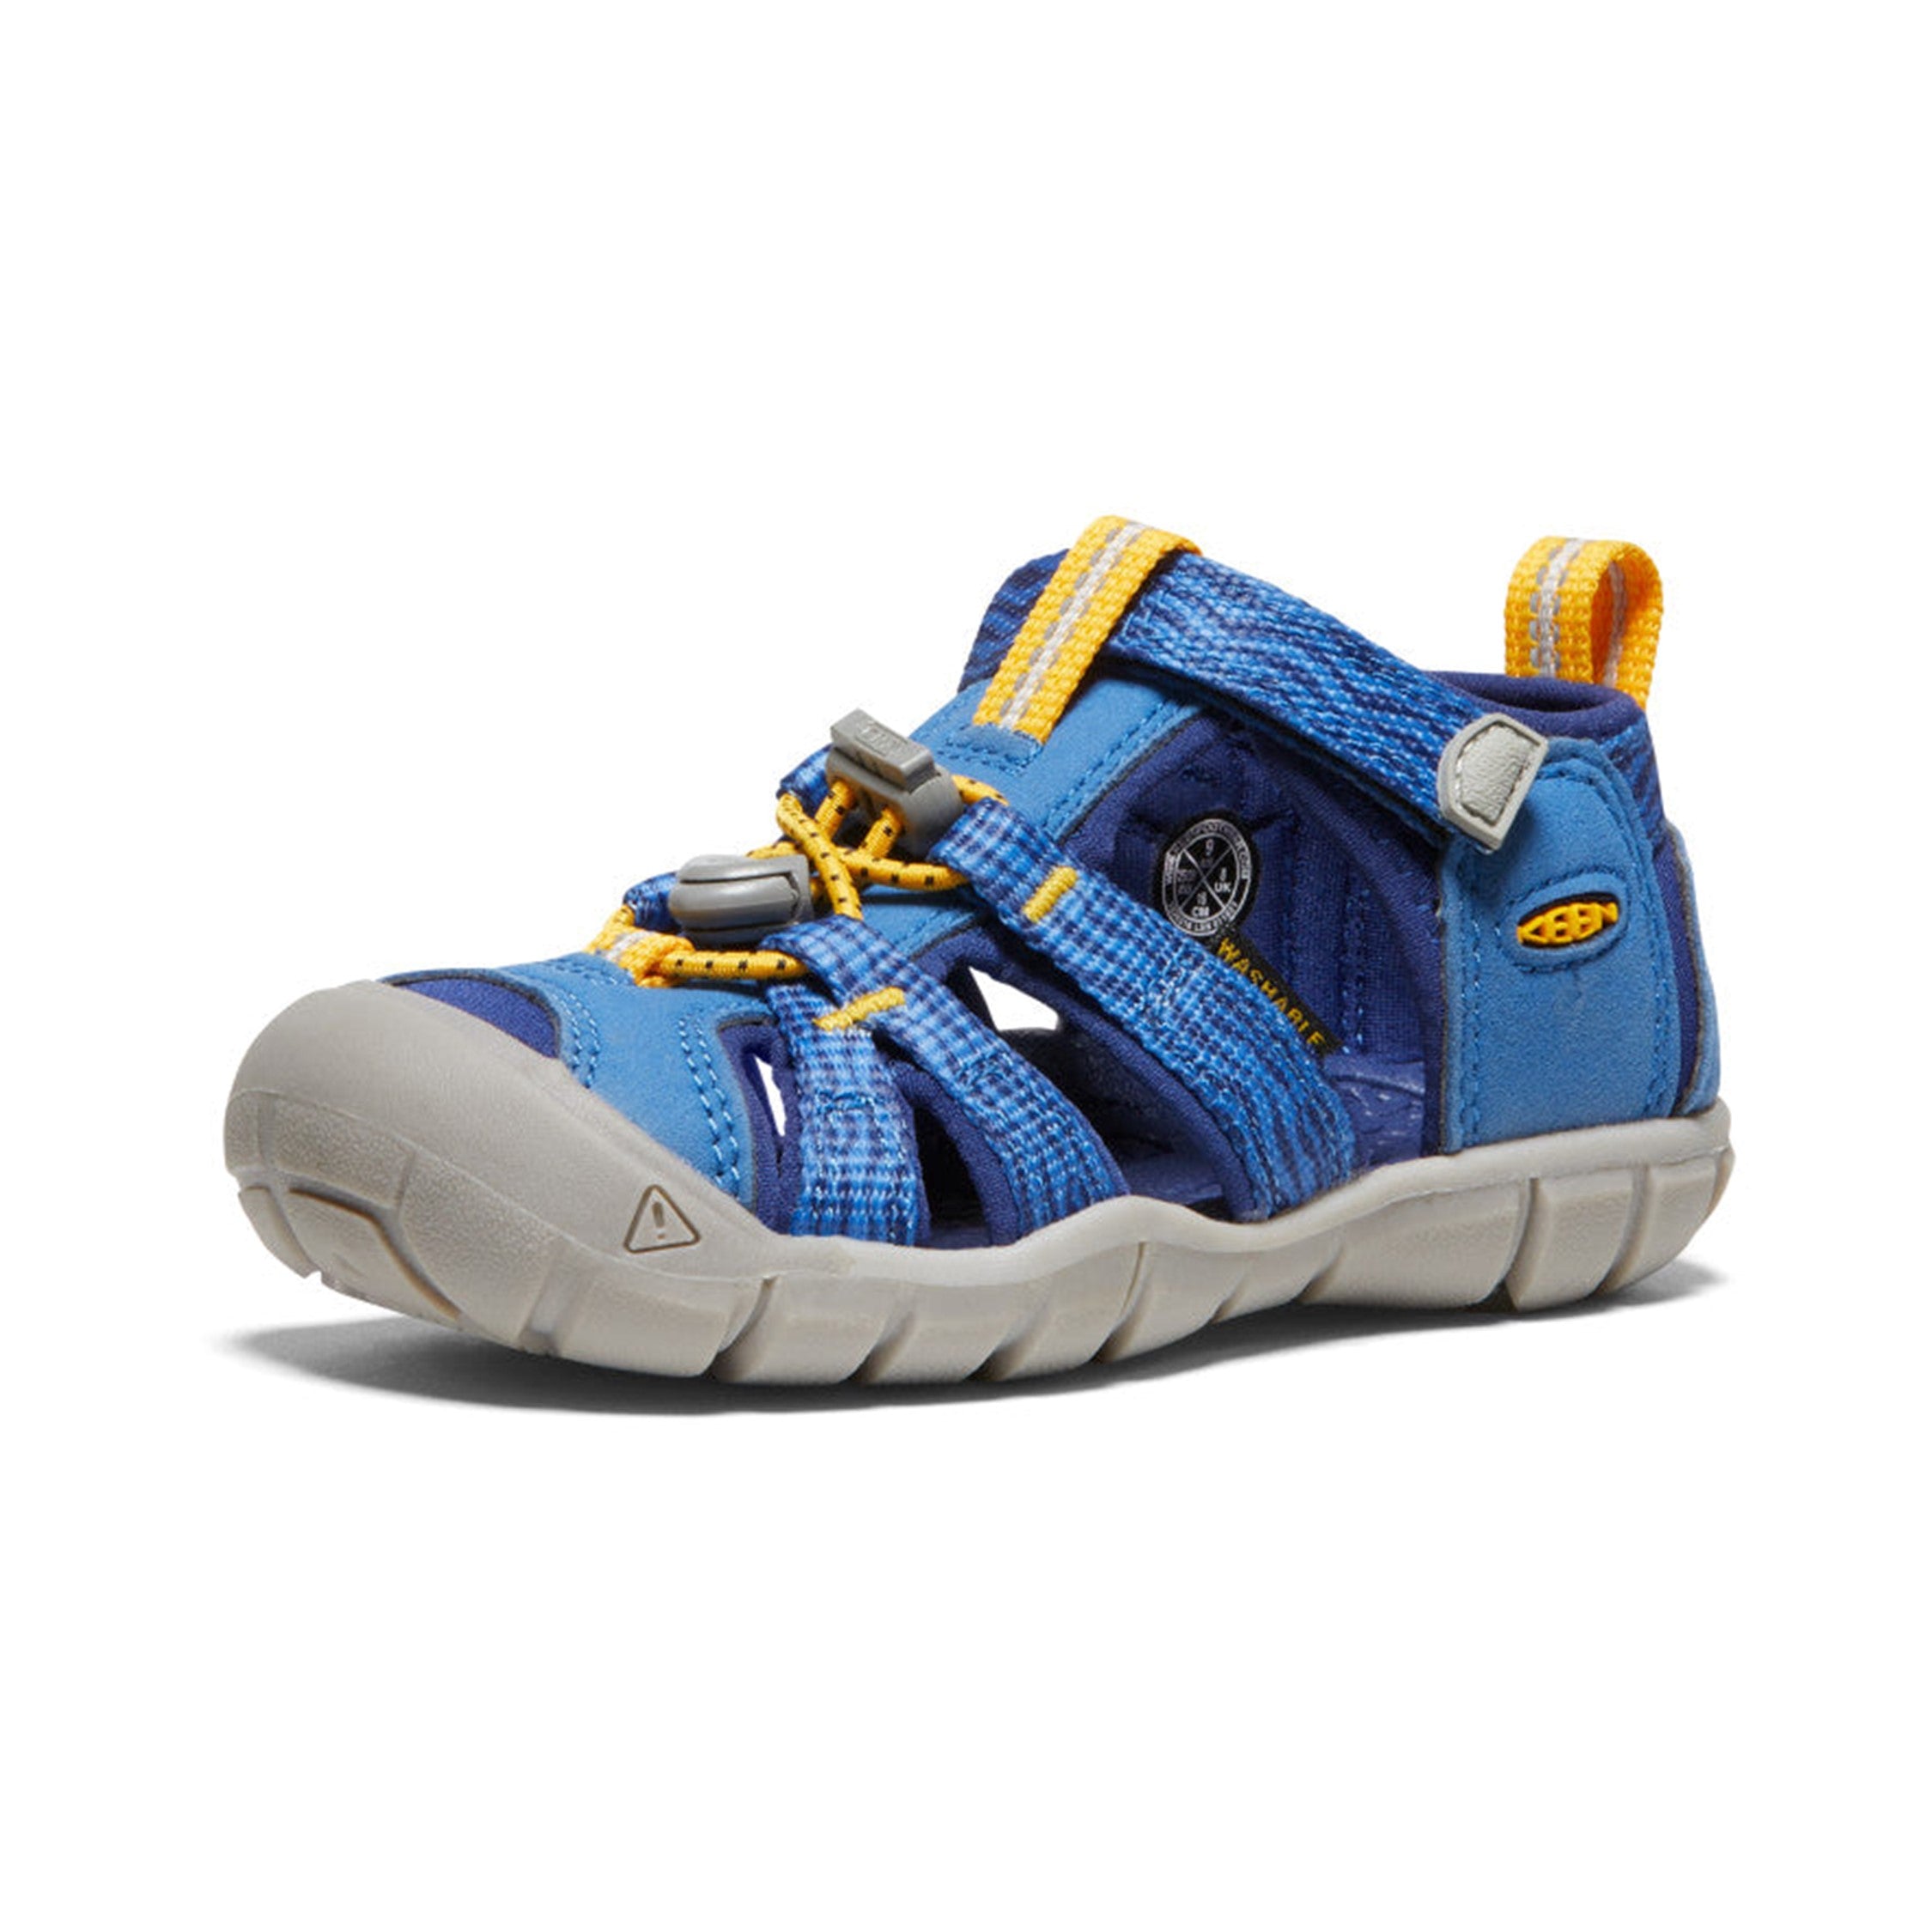 Seacamp II Kids' CNX Active Sandal - Bright Cobalt/Yellow